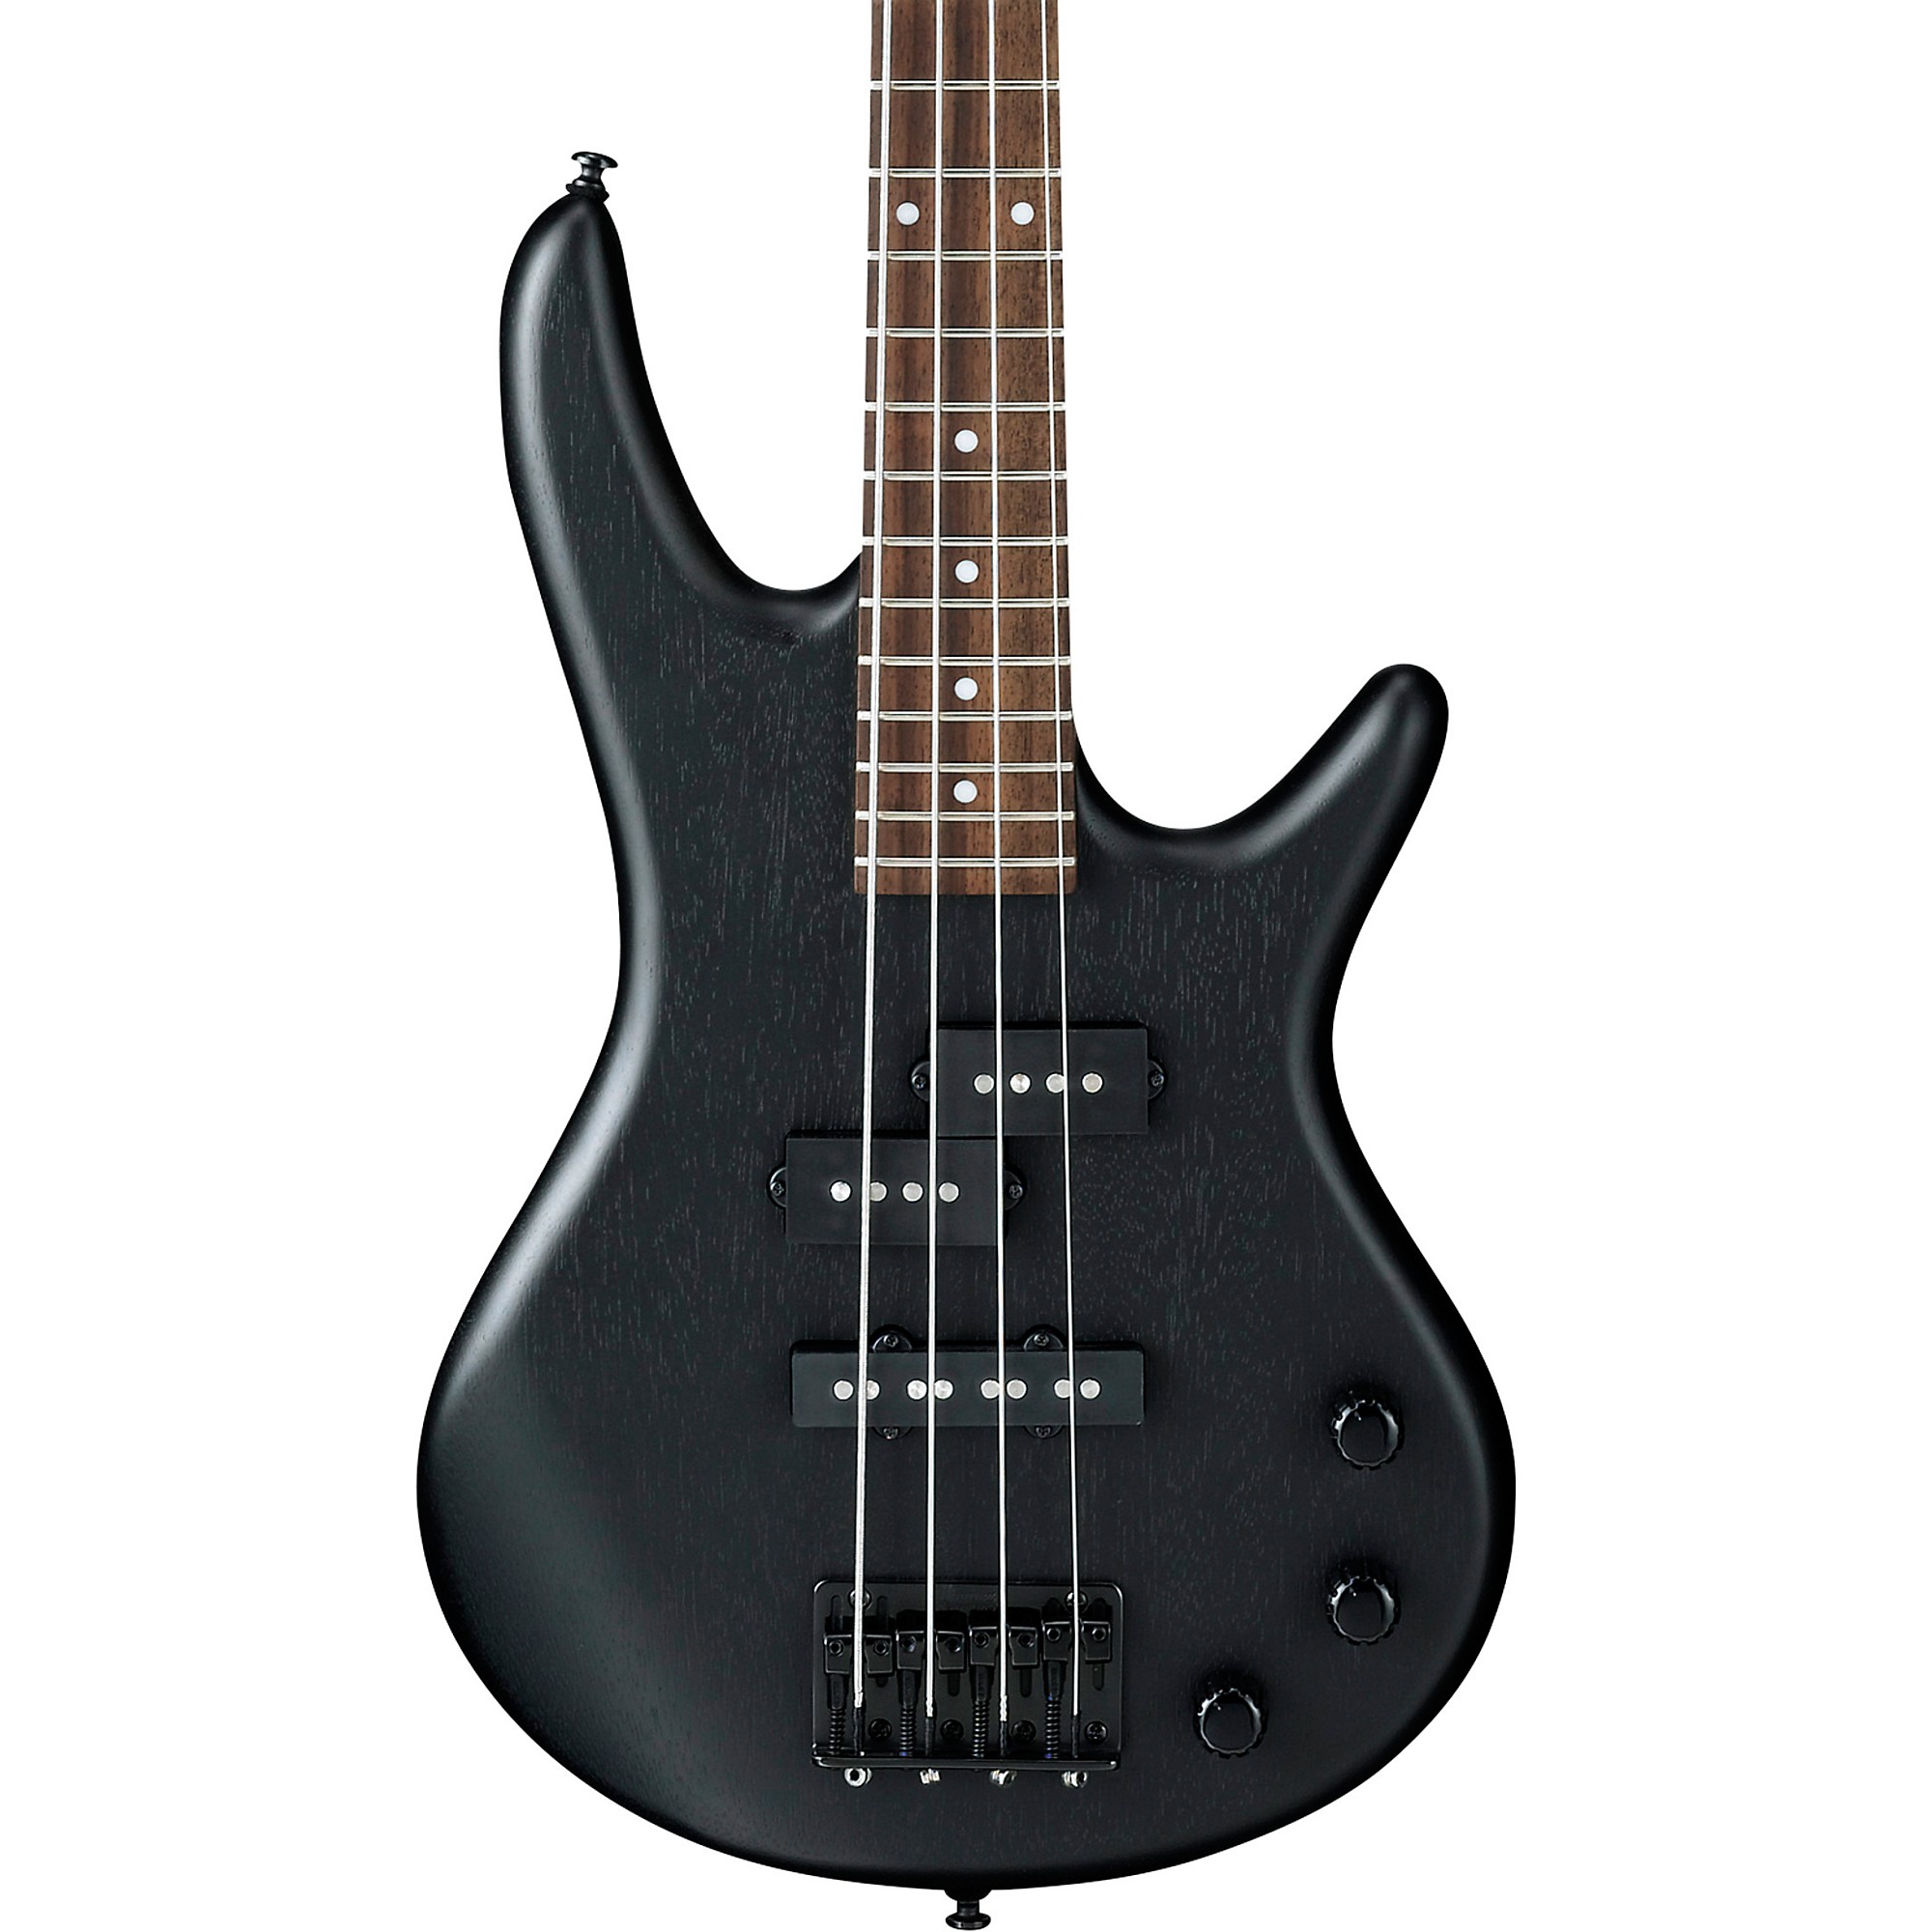 Ibanez GSRM20 miKro Короткая мензура Бас-гитара состаренного цвета черного палисандра цена и фото